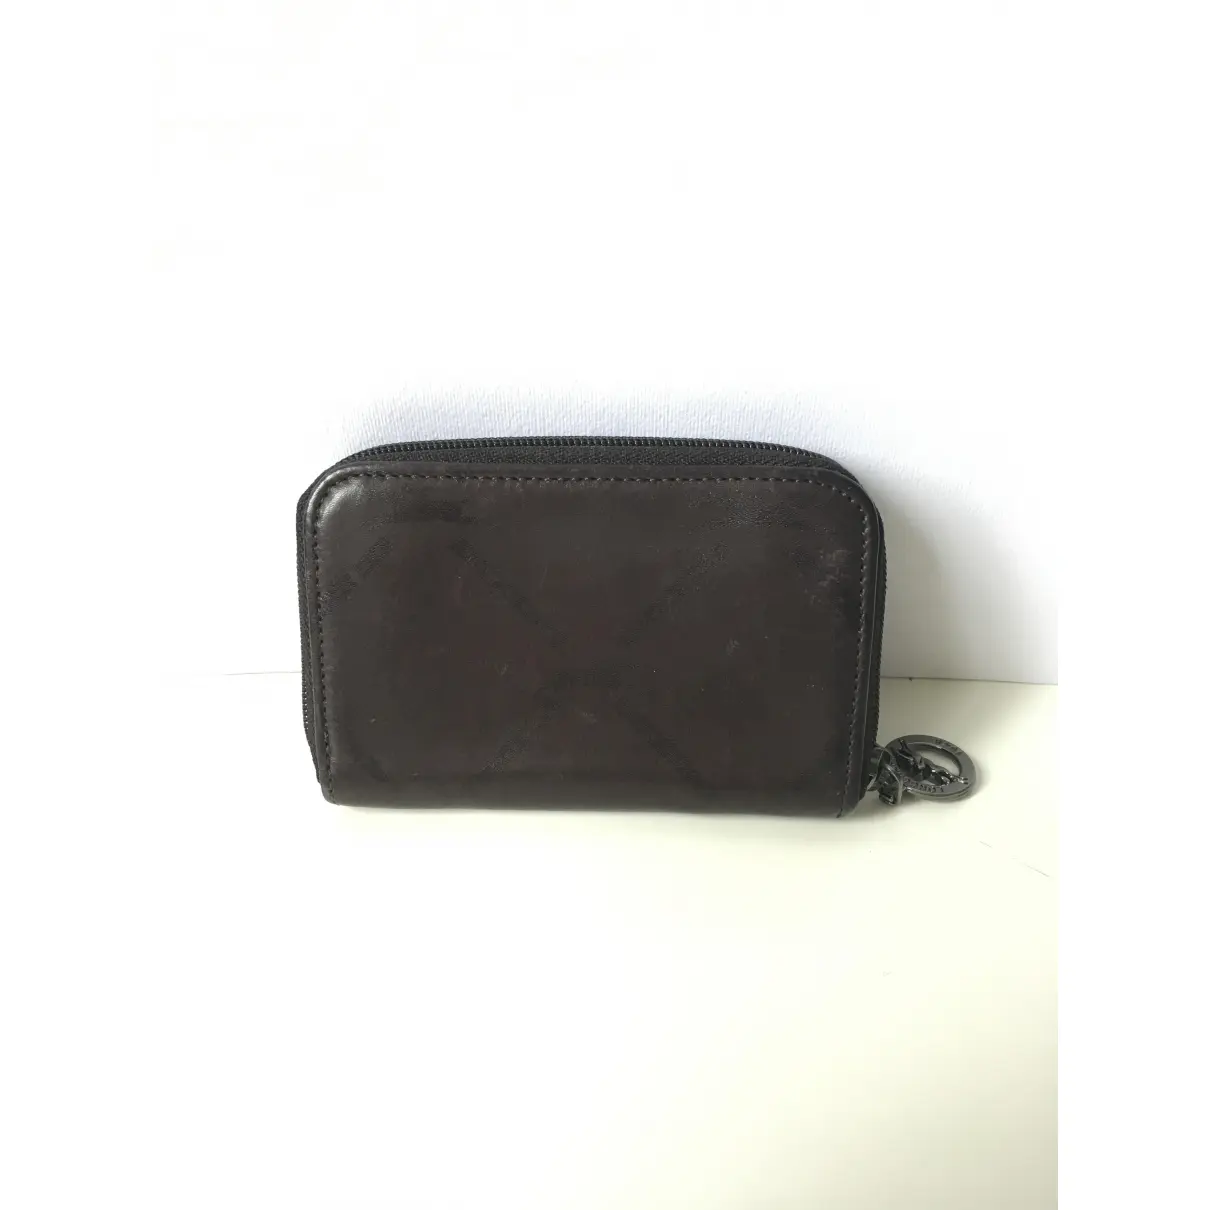 Buy Longchamp Leather wallet online